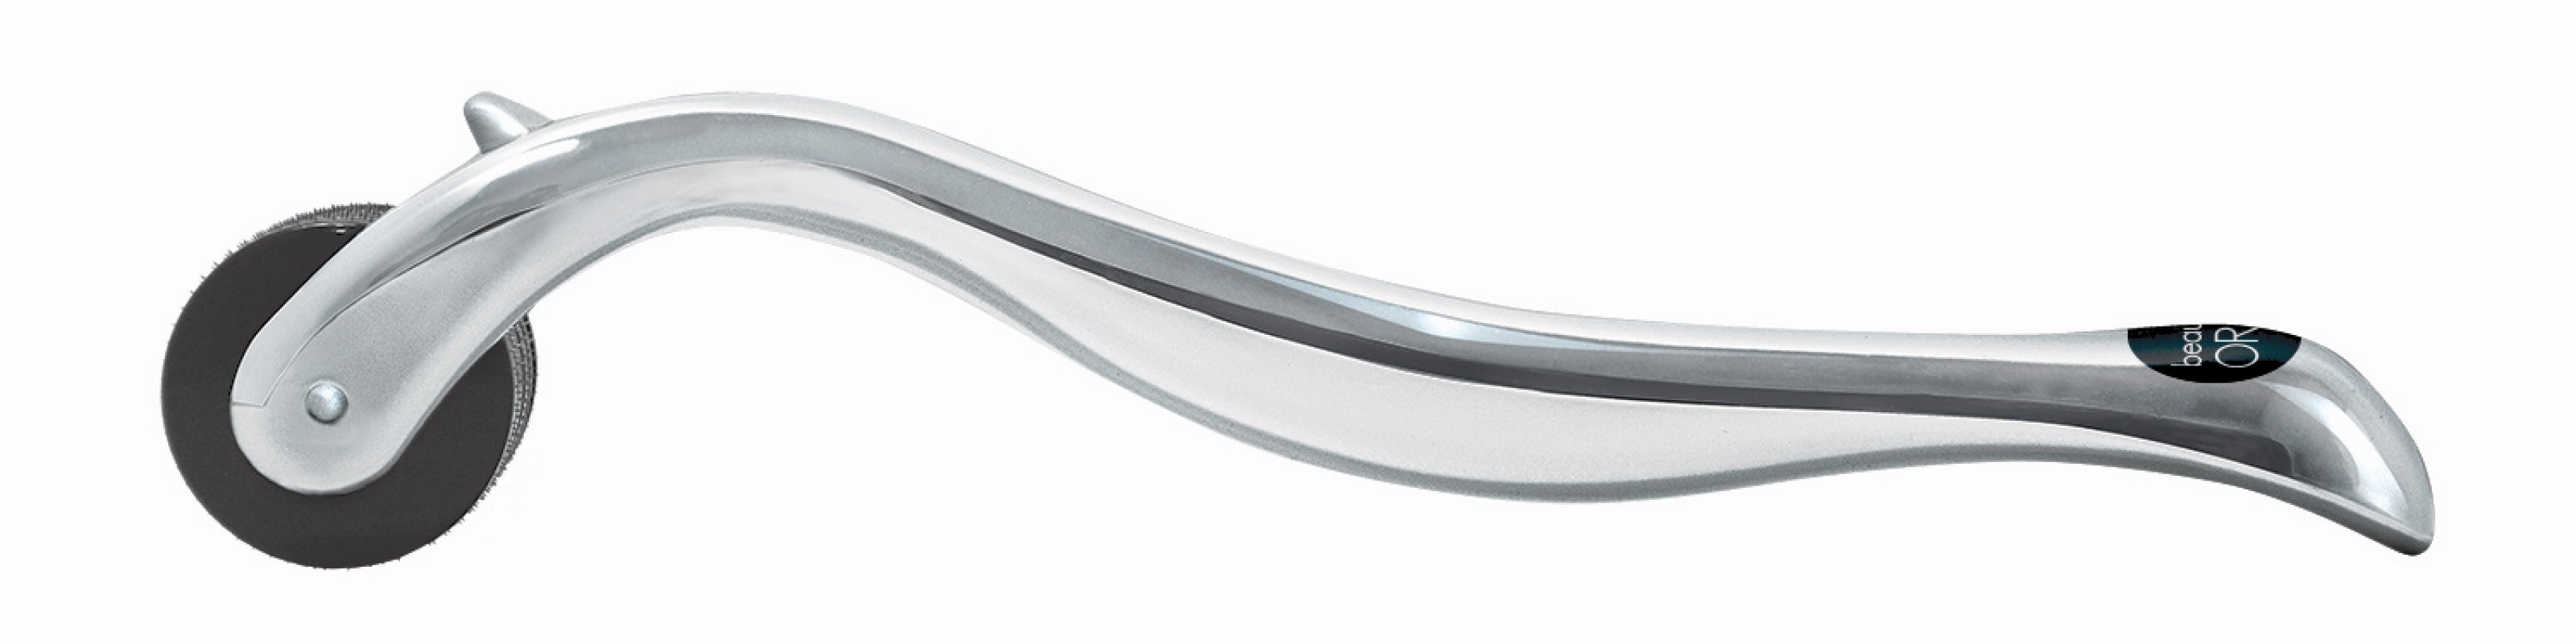 ORA Silver Deluxe Microneedle Dermal Roller System - SILVER Handle/Black Head (0.25mm)